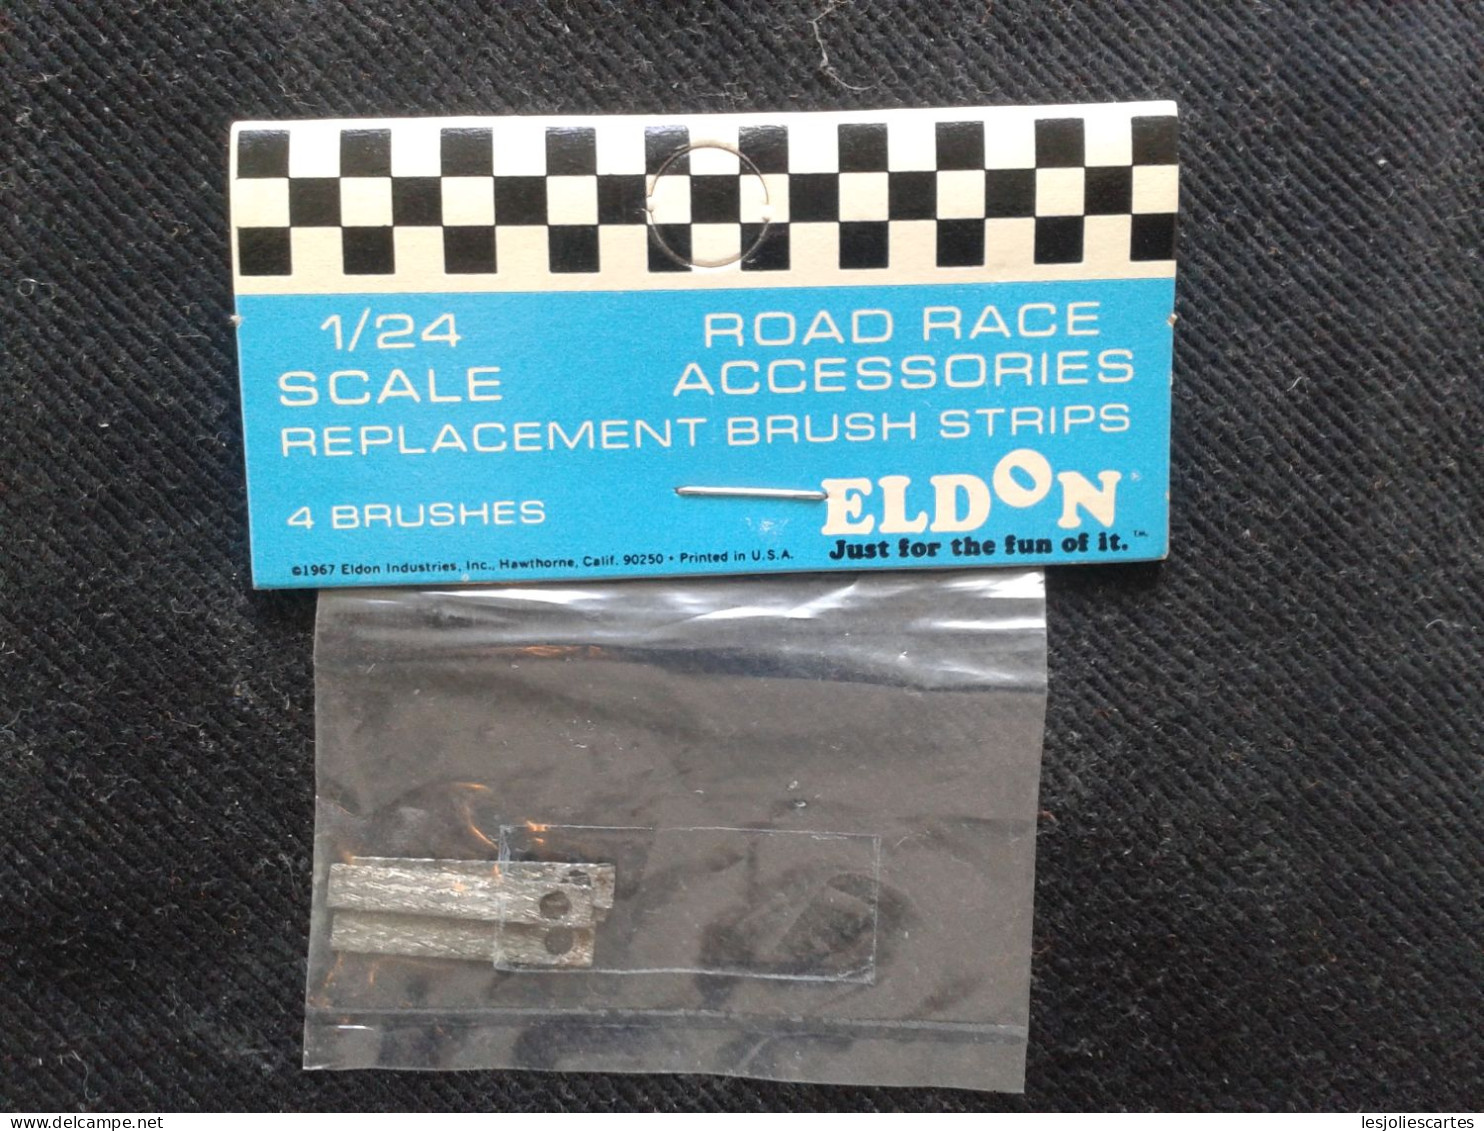 Eldon Replacement Brush Strips Road Race Accessories 1/24 - Autorennbahnen